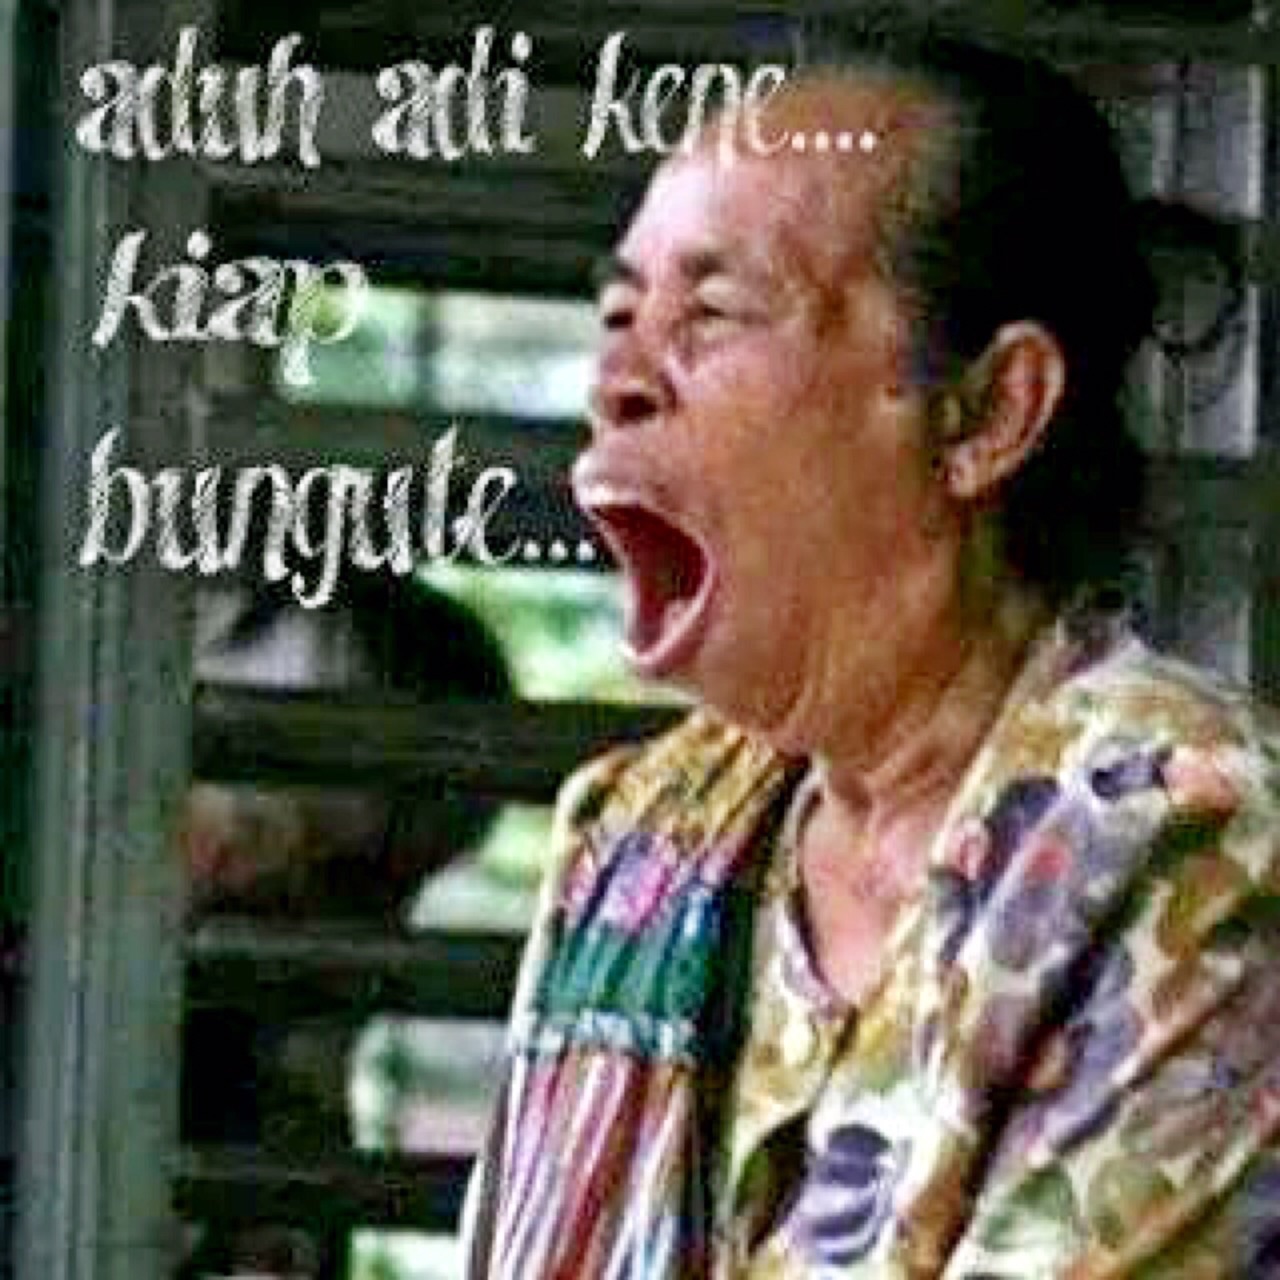 Kumpulan Meme Bahasa Bali Lucu Humor Lucu Banget